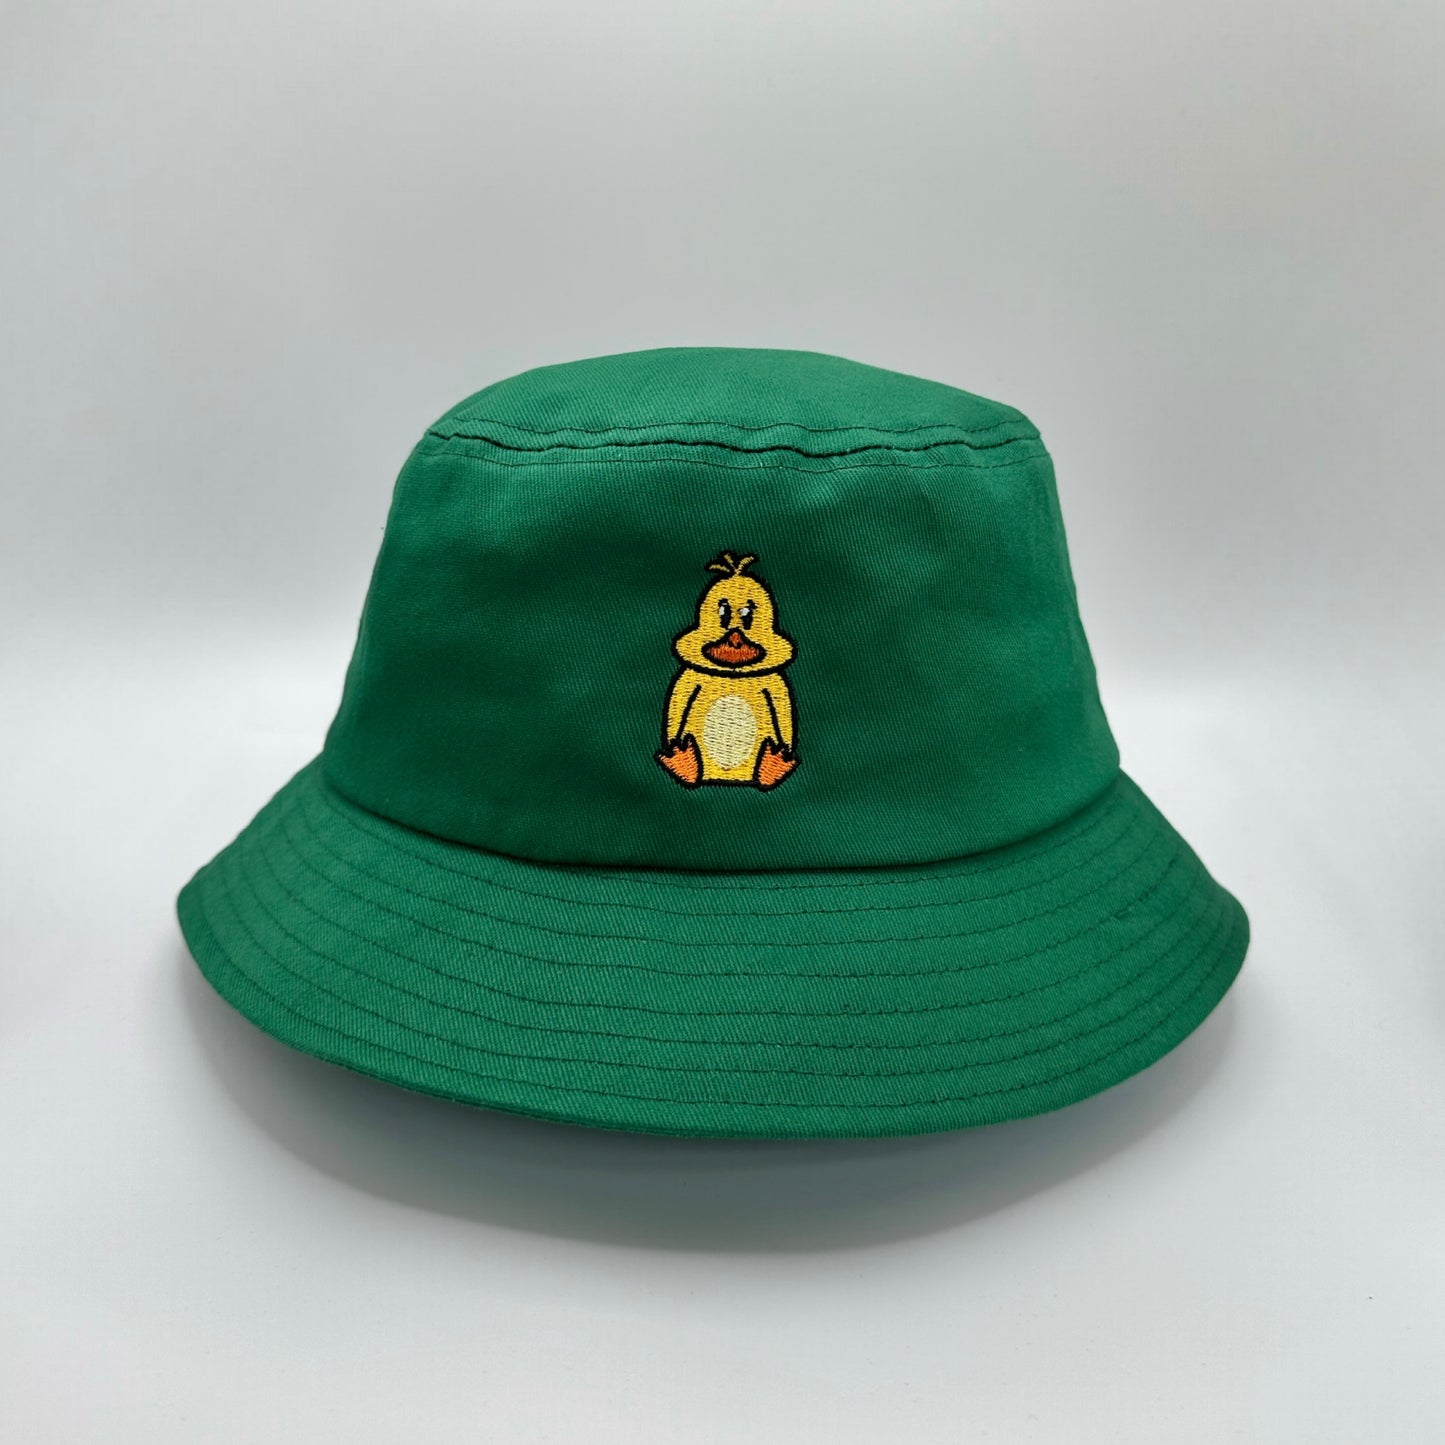 The Official Duckett's Bucket Hat - Green